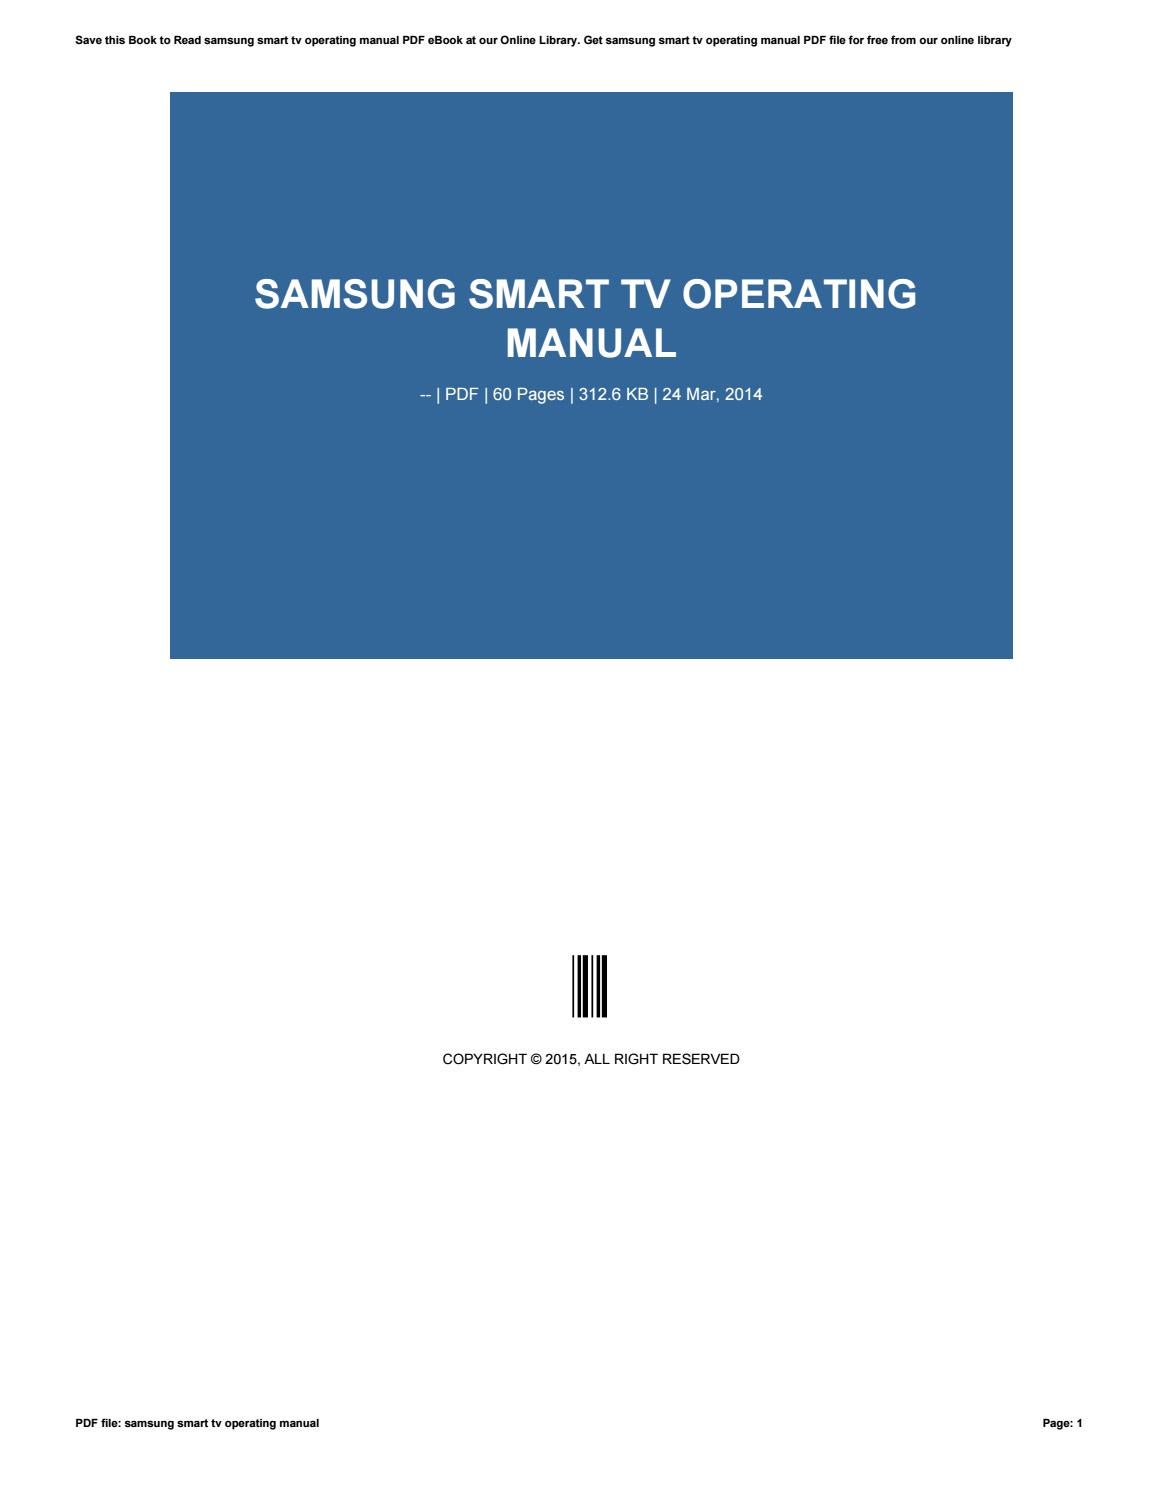 samsung smart tv guide slow